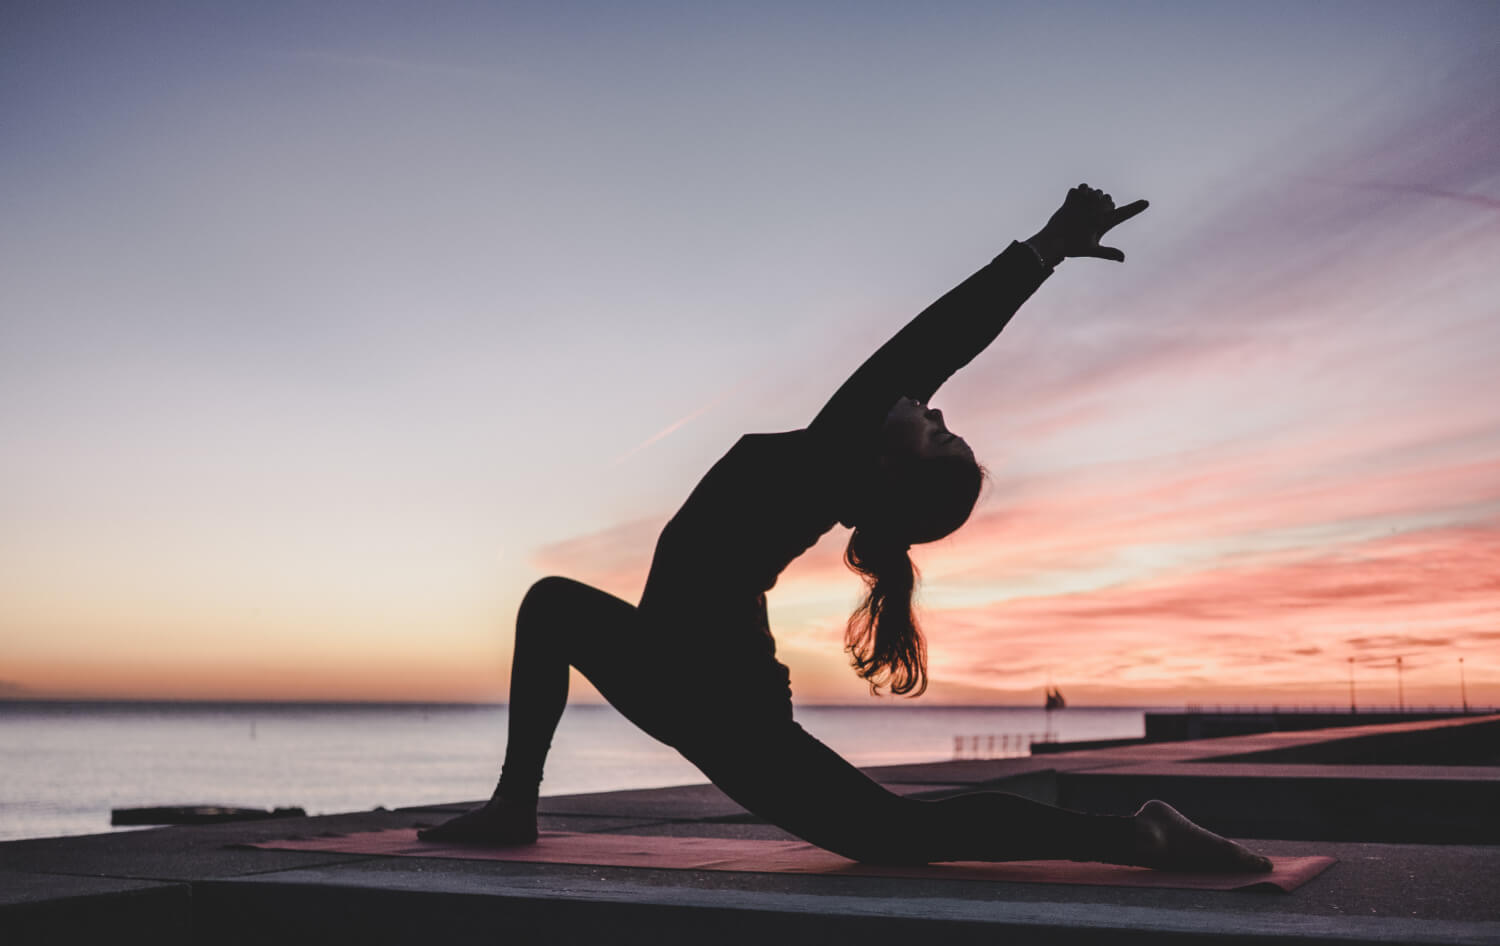 10 STUNNING Yoga Retreats in Ireland in 2024